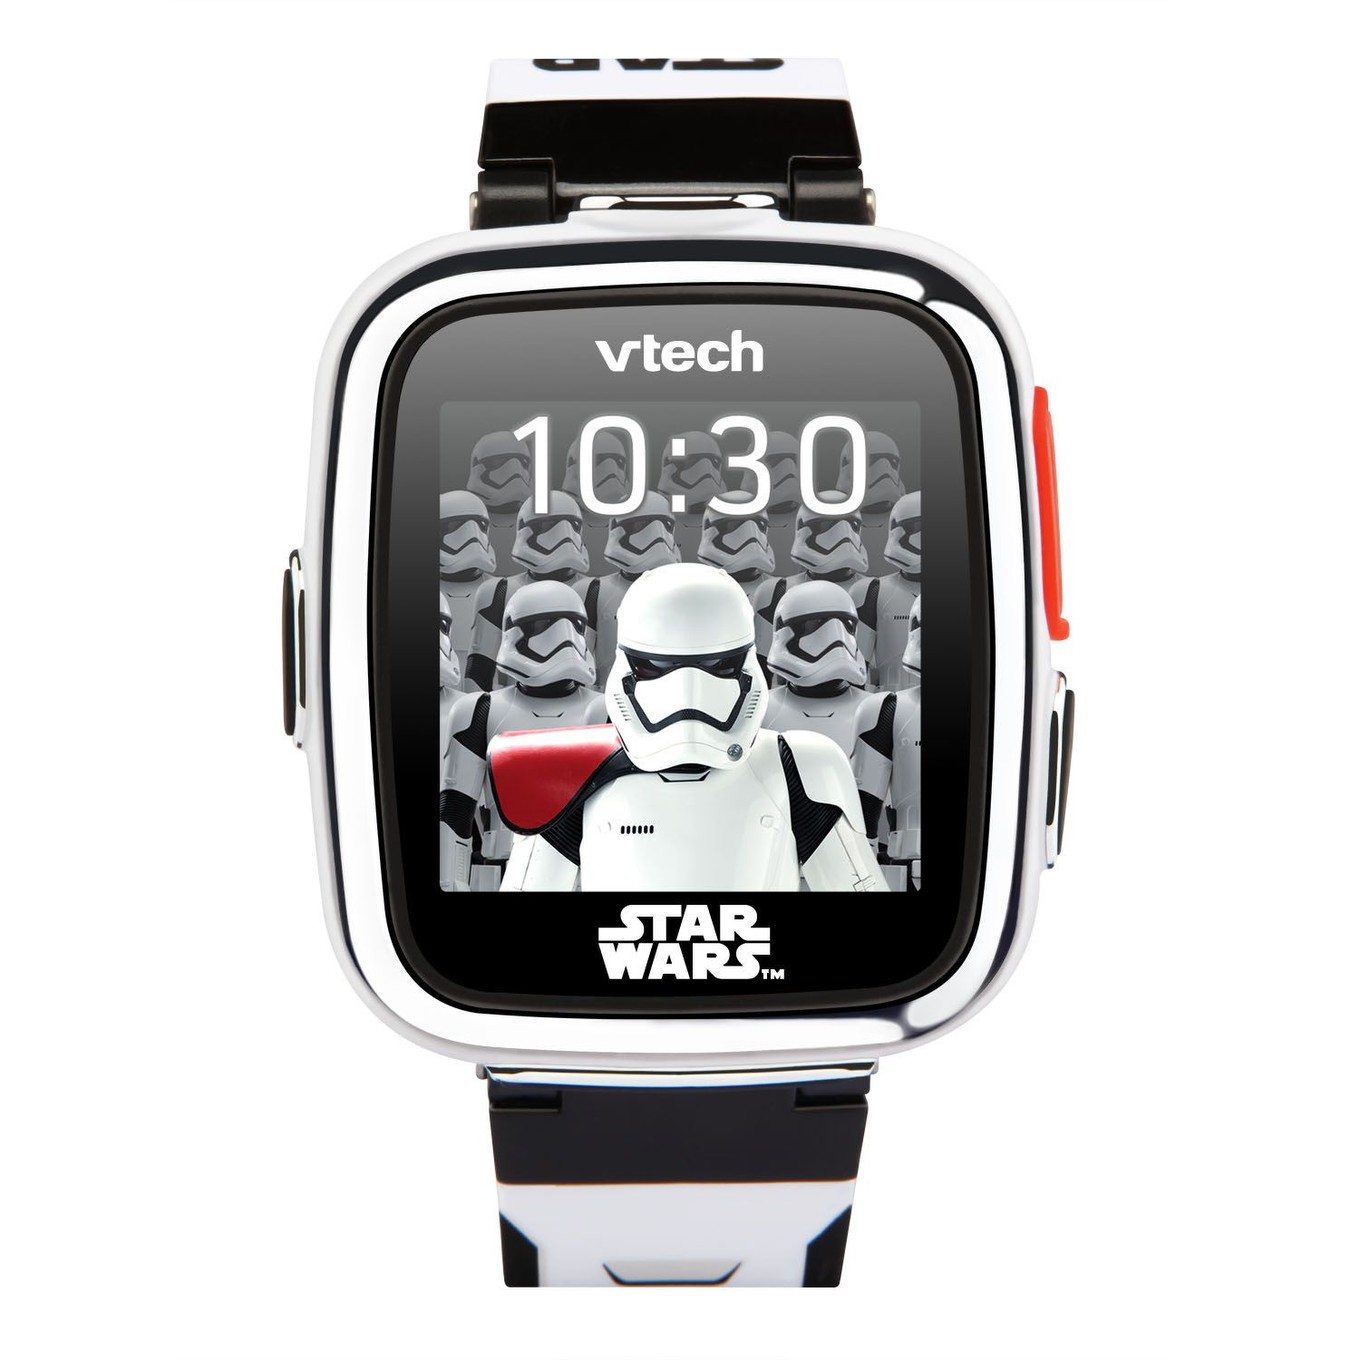 vtech star wars stormtrooper watch